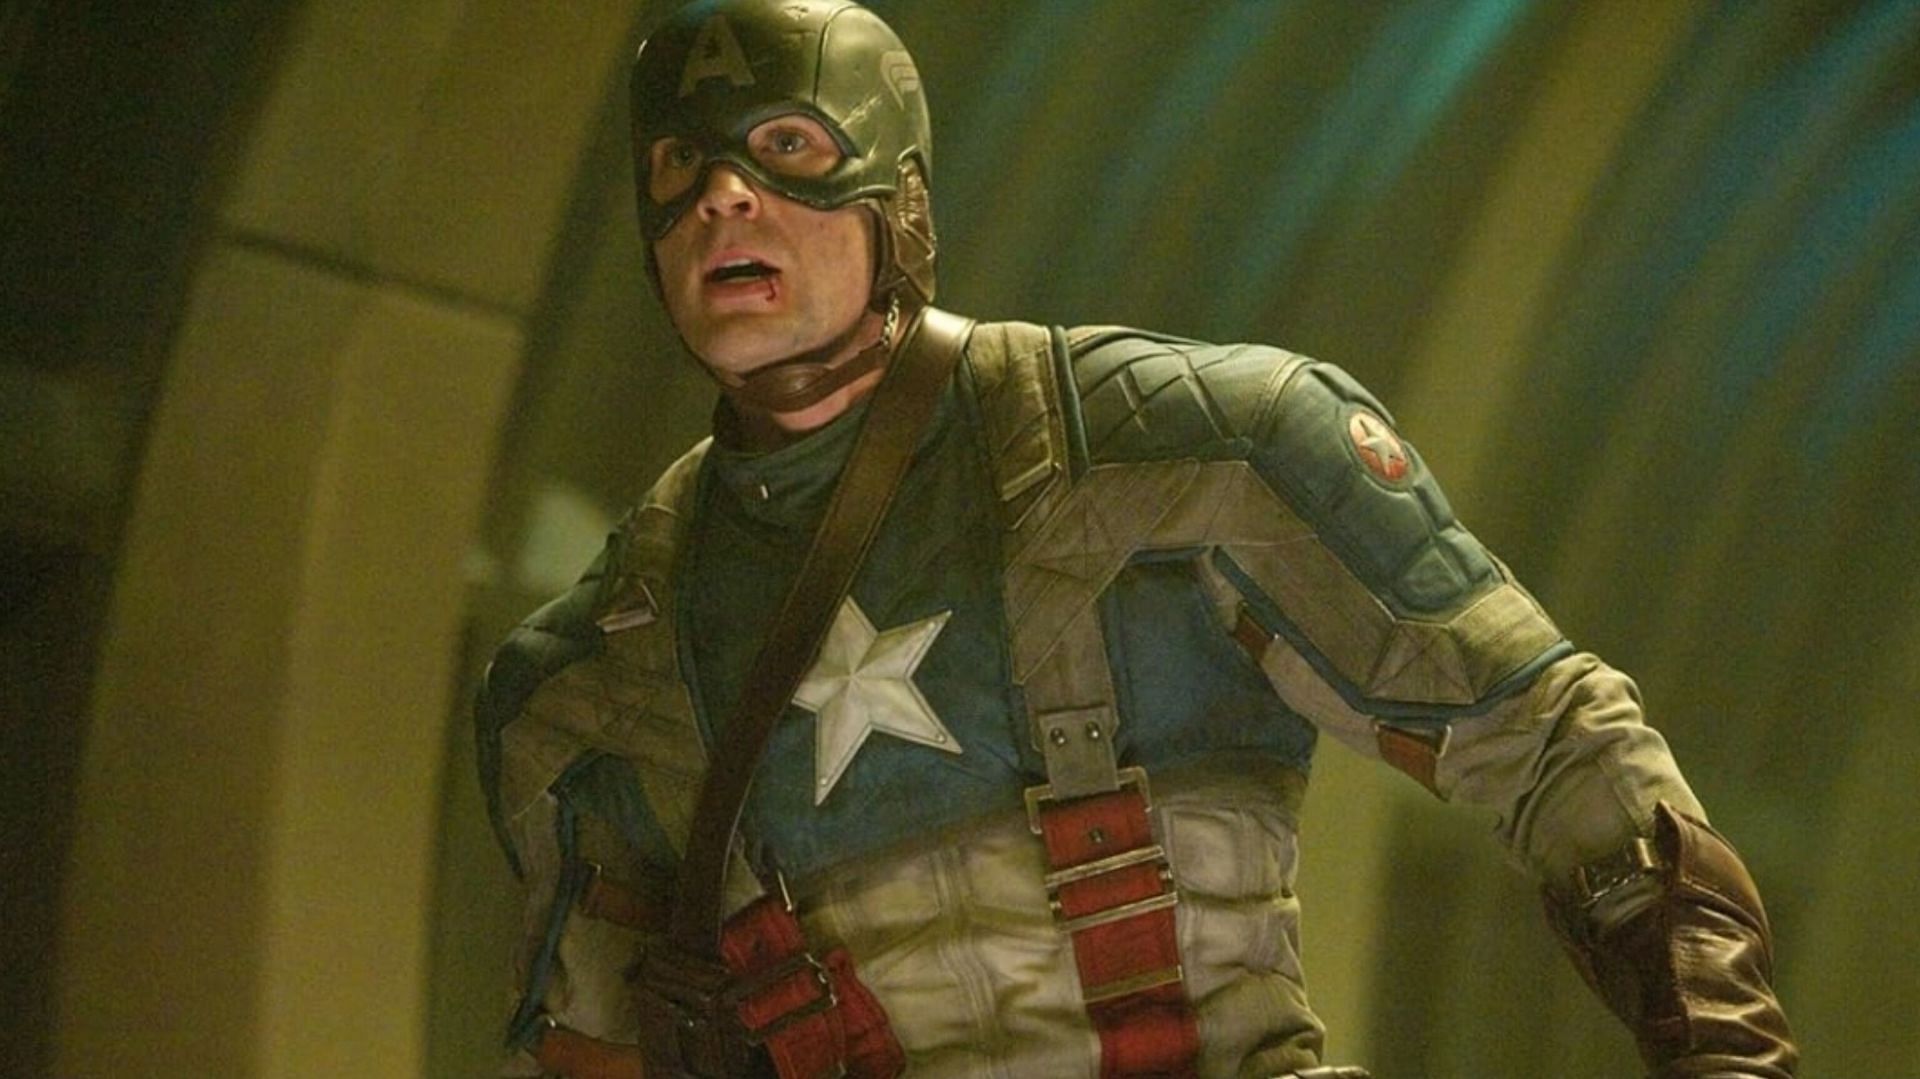 Captain America: The First Avenger (2011) image via Paramount